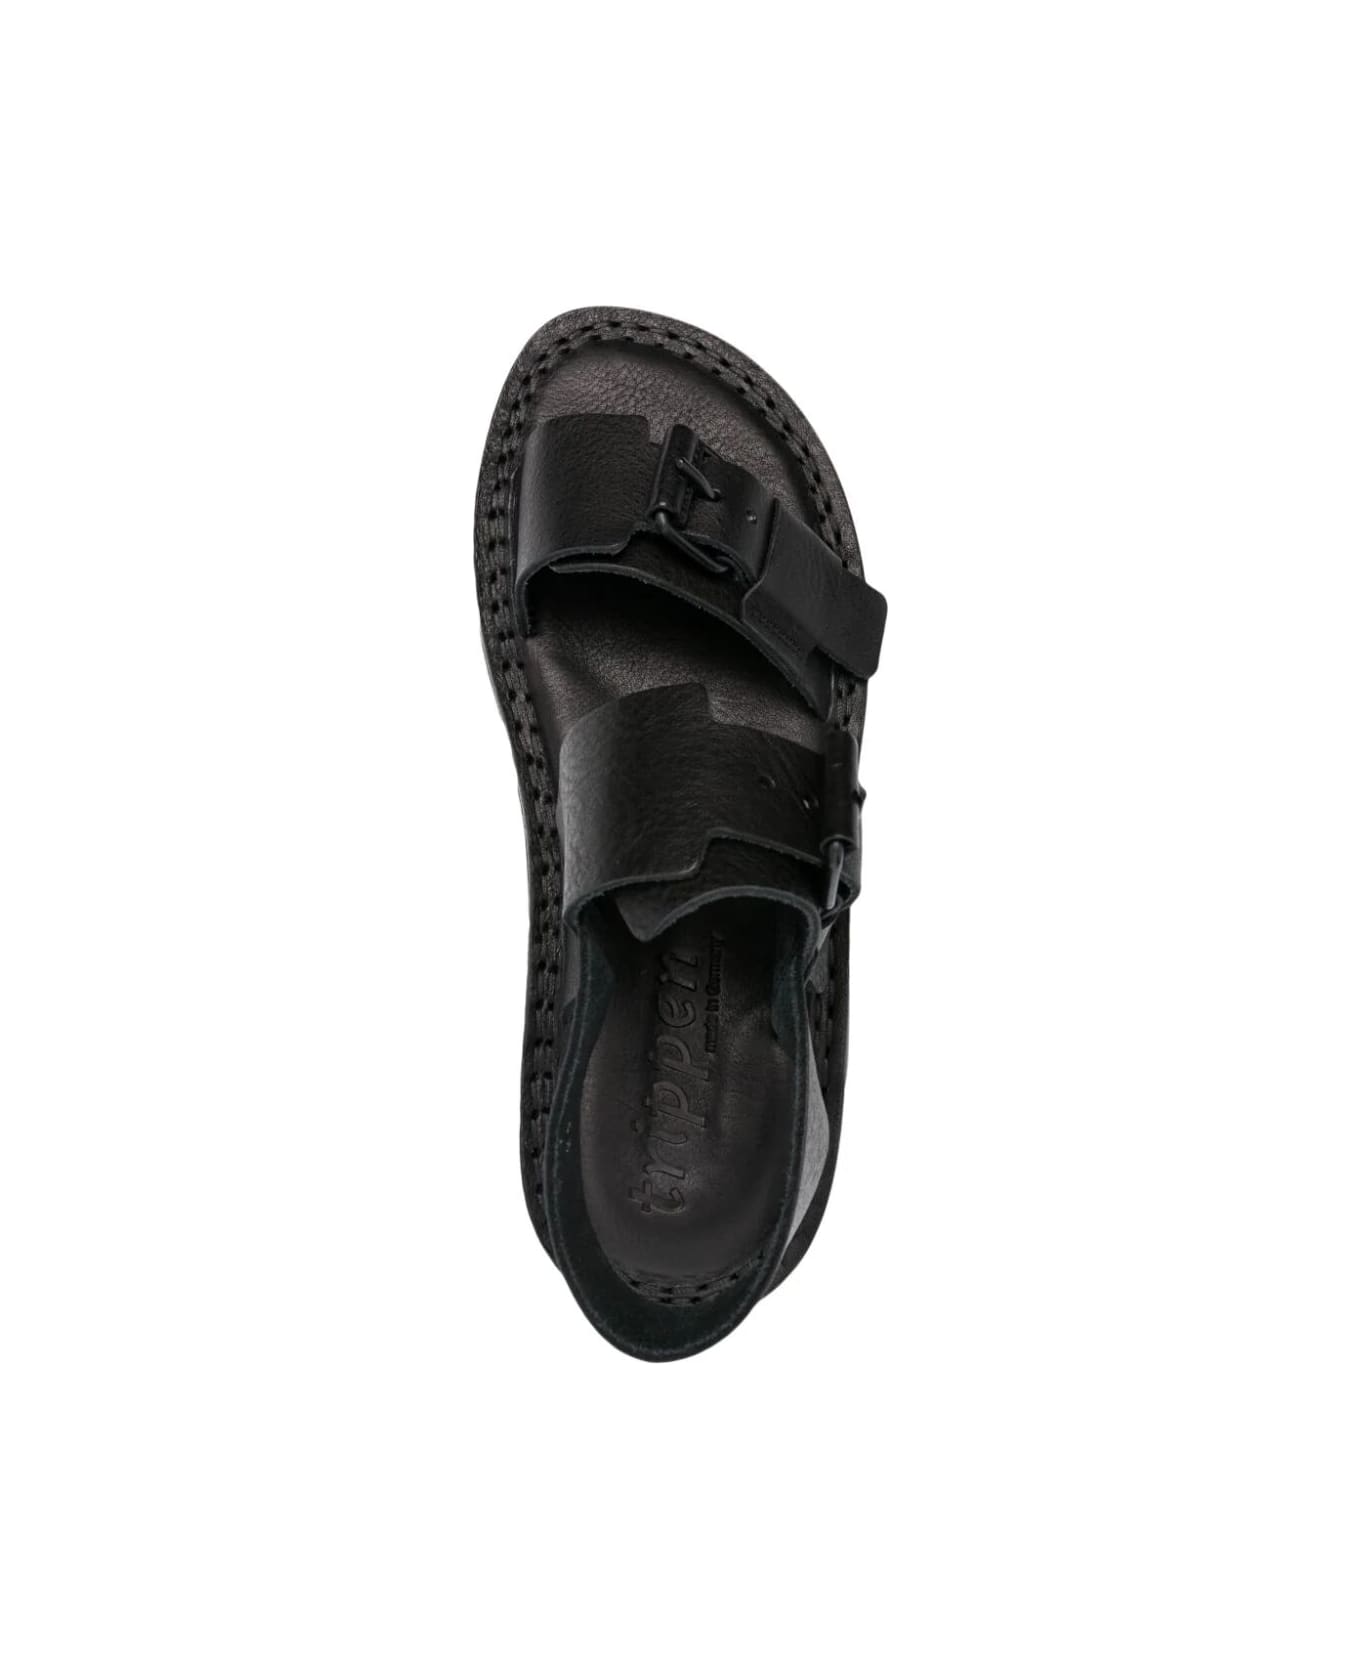 Trippen Review Sandal - Blk Black